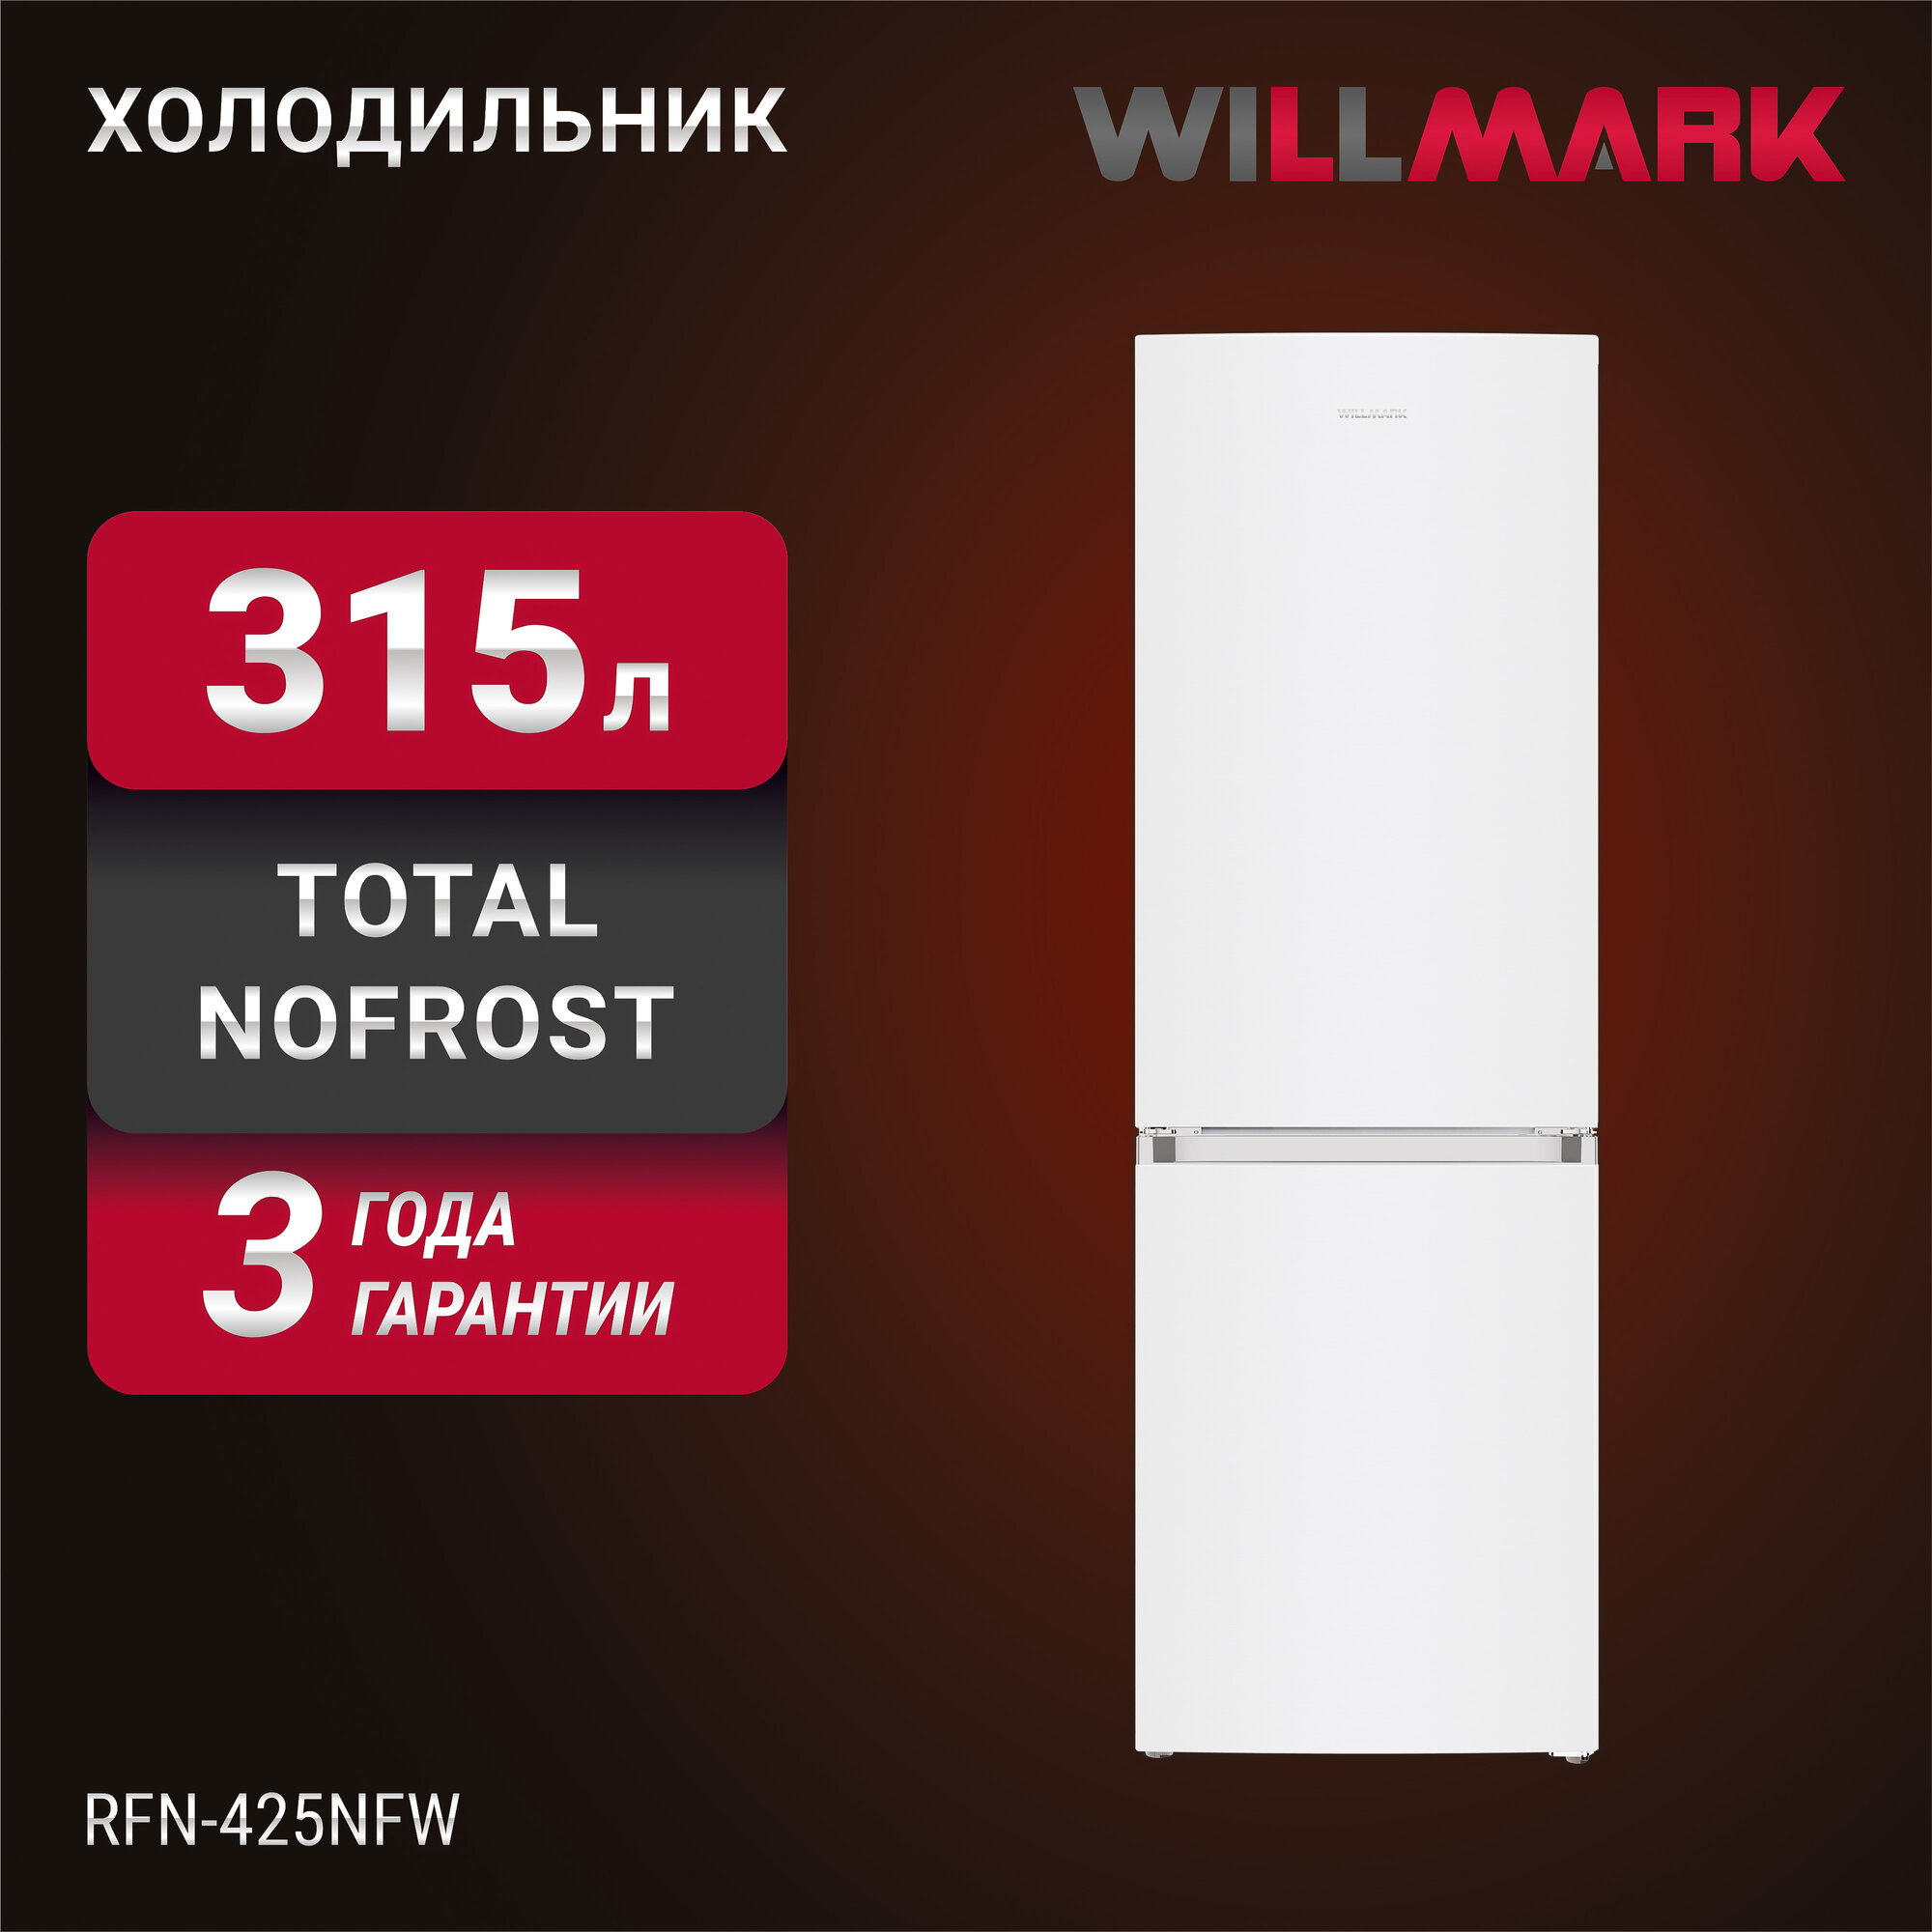 Холодильник WILLMARK RFN-425NFW (315л, Total NoFrost, А+, хлад. R600A, нижн. мороз, гар.3 года, белый)